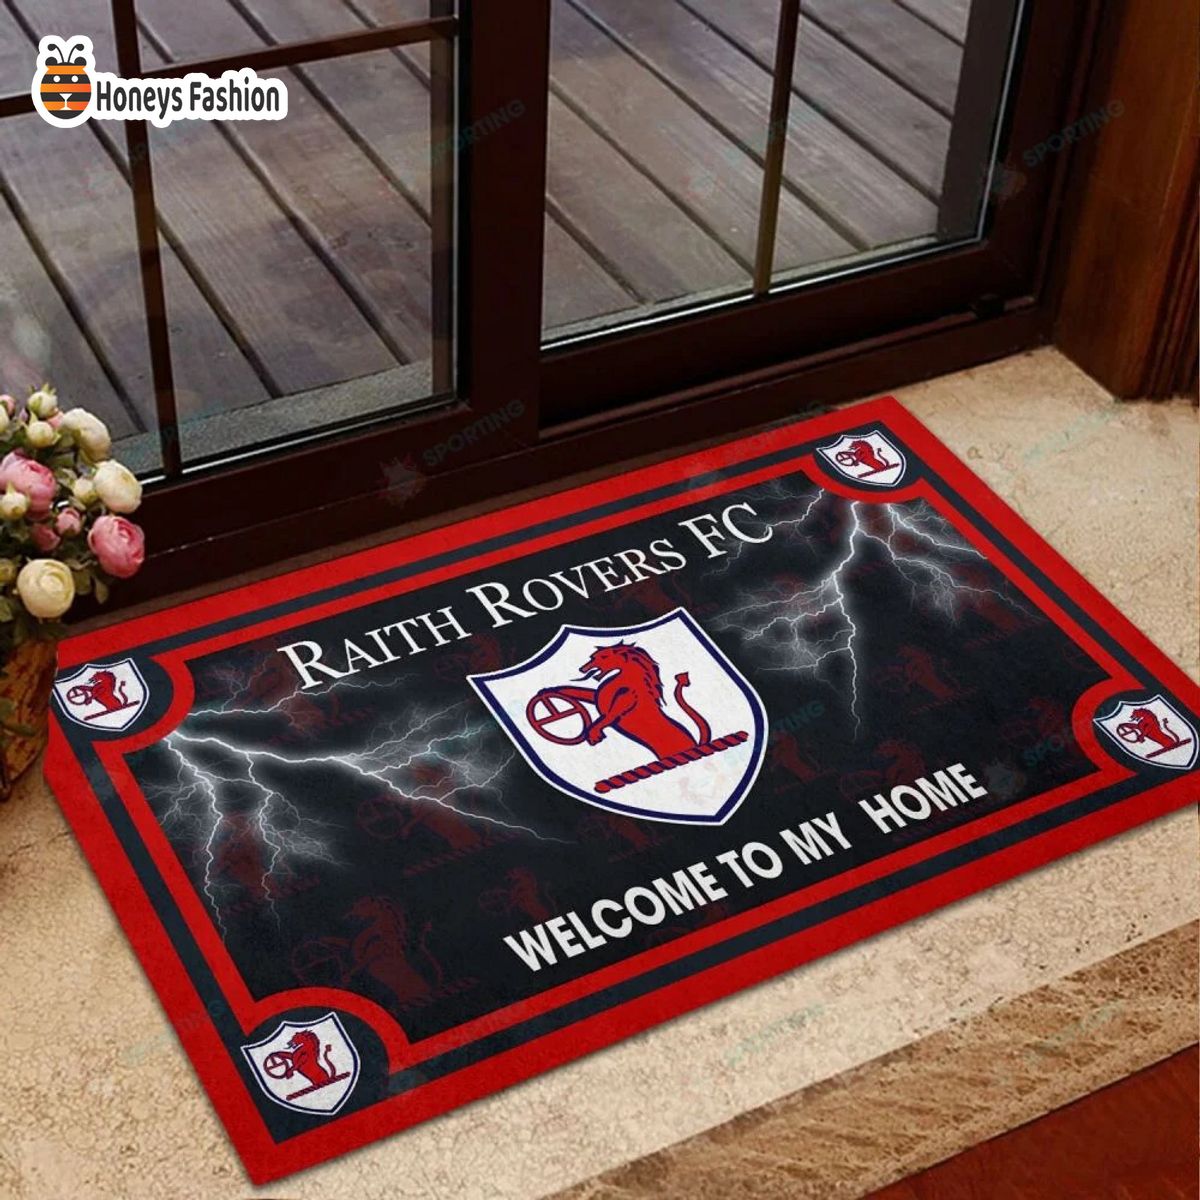 Raith Rovers F.C. welcome to my home doormat